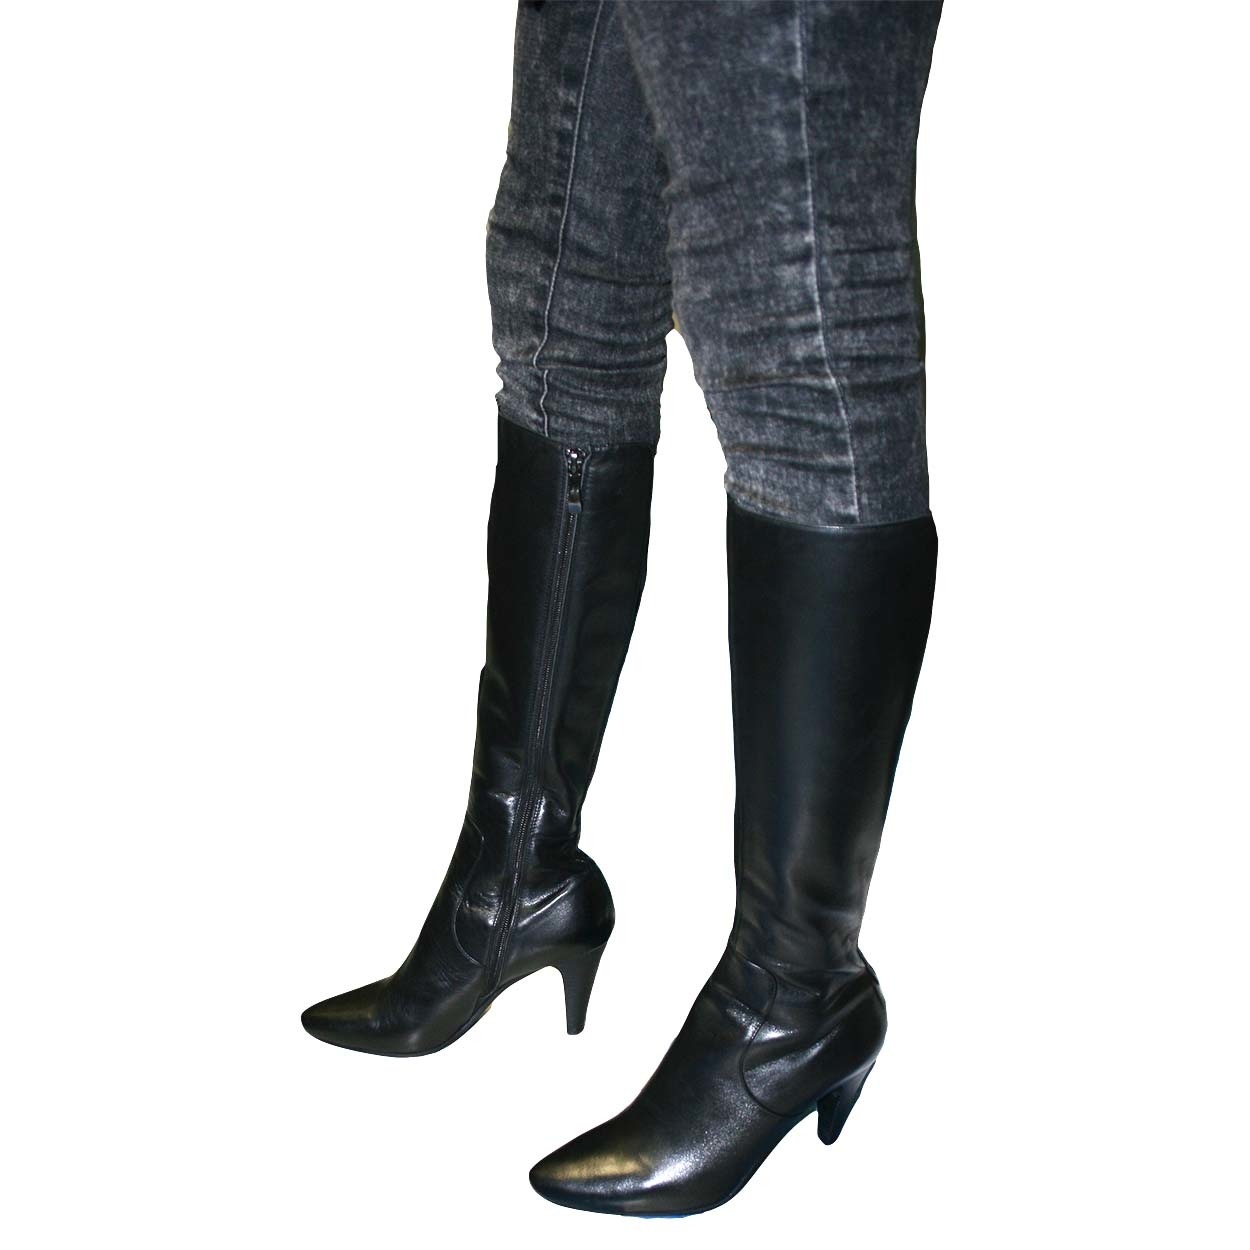 slim calf black leather boots